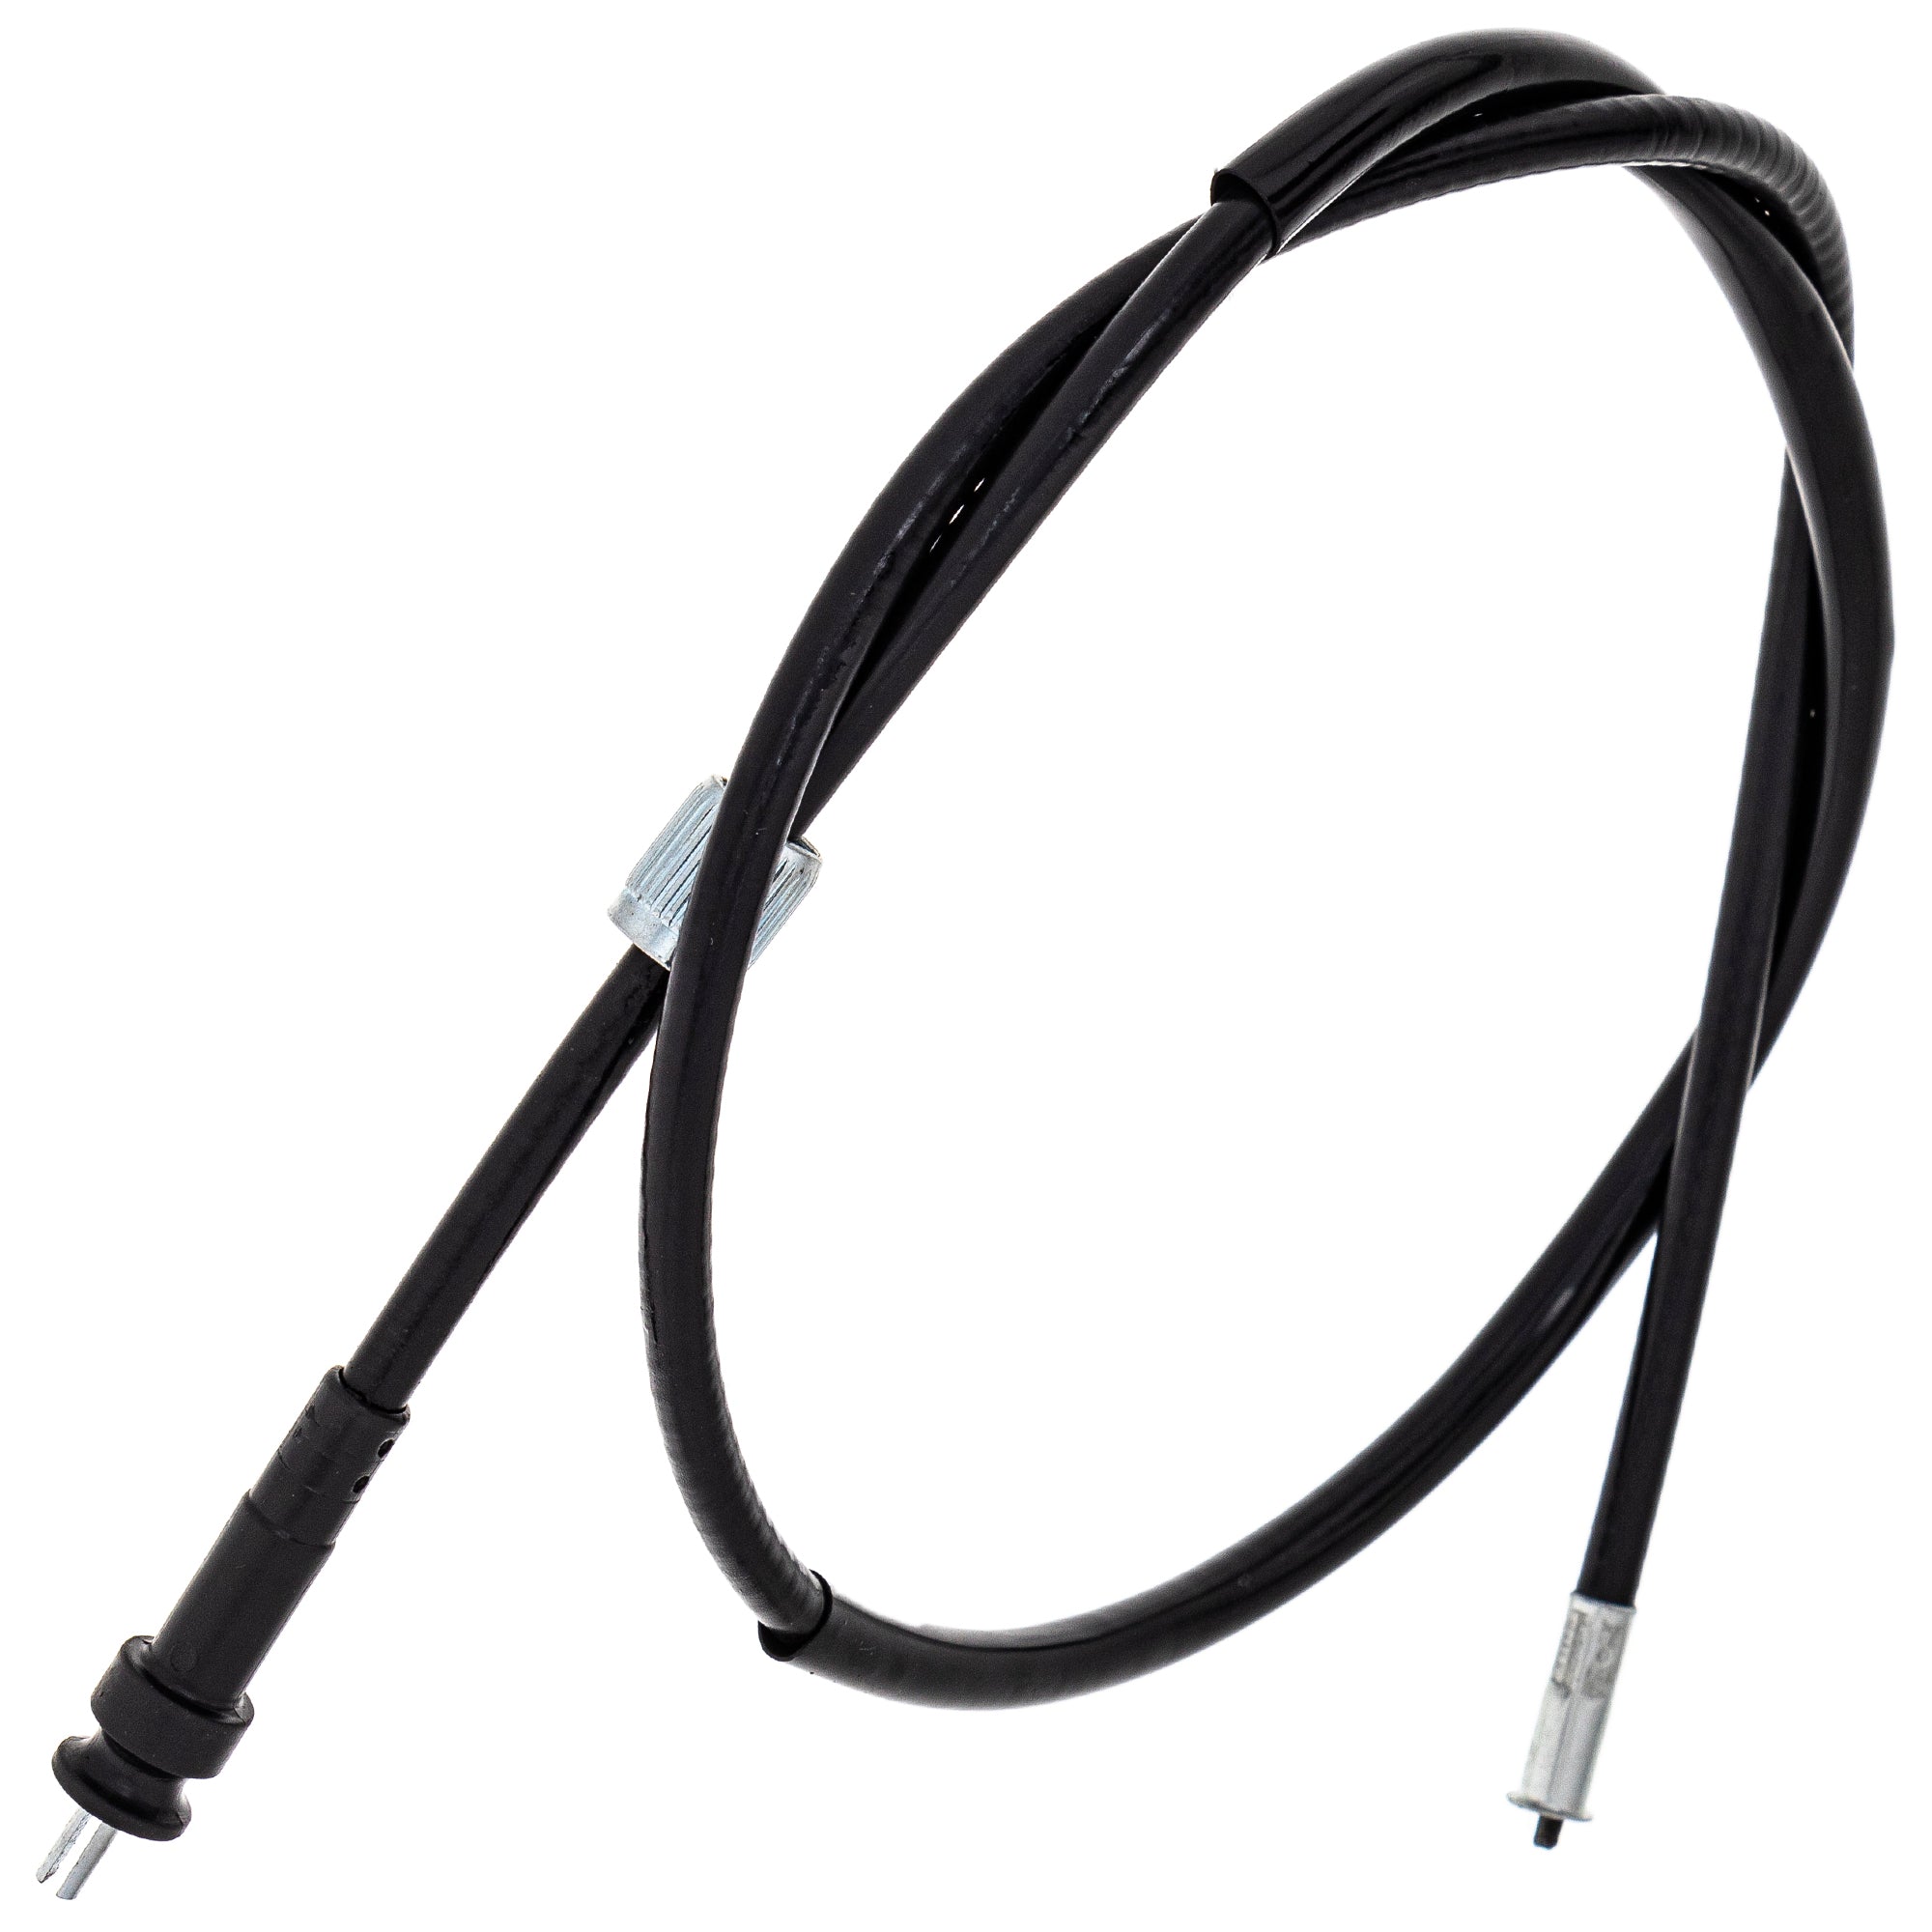 Speedometer Cable for Honda Nighthawk 450 650 XL500S CB900C